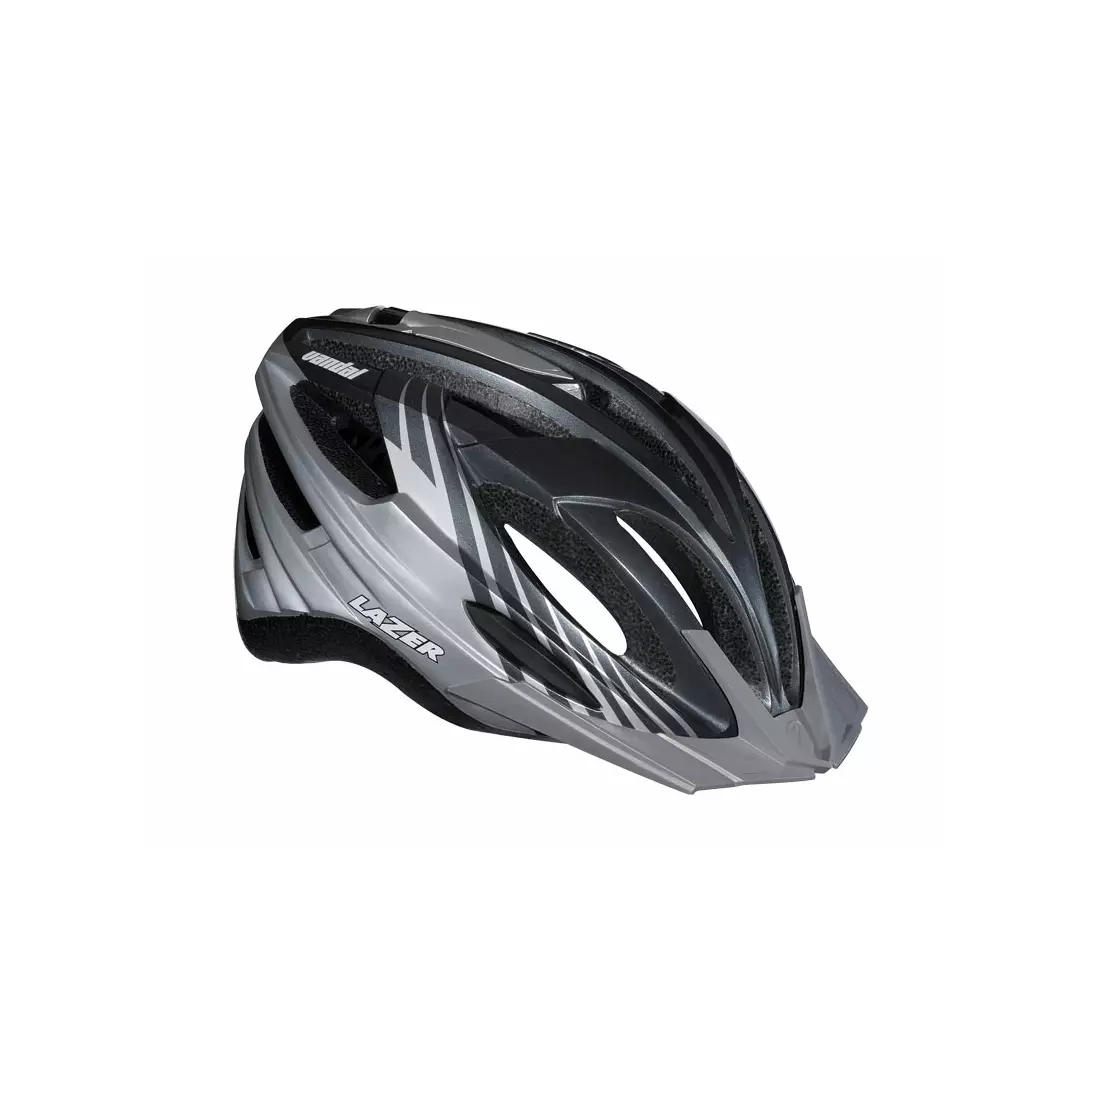 LAZER VANDAL MTB bicycle helmet, gray and silver